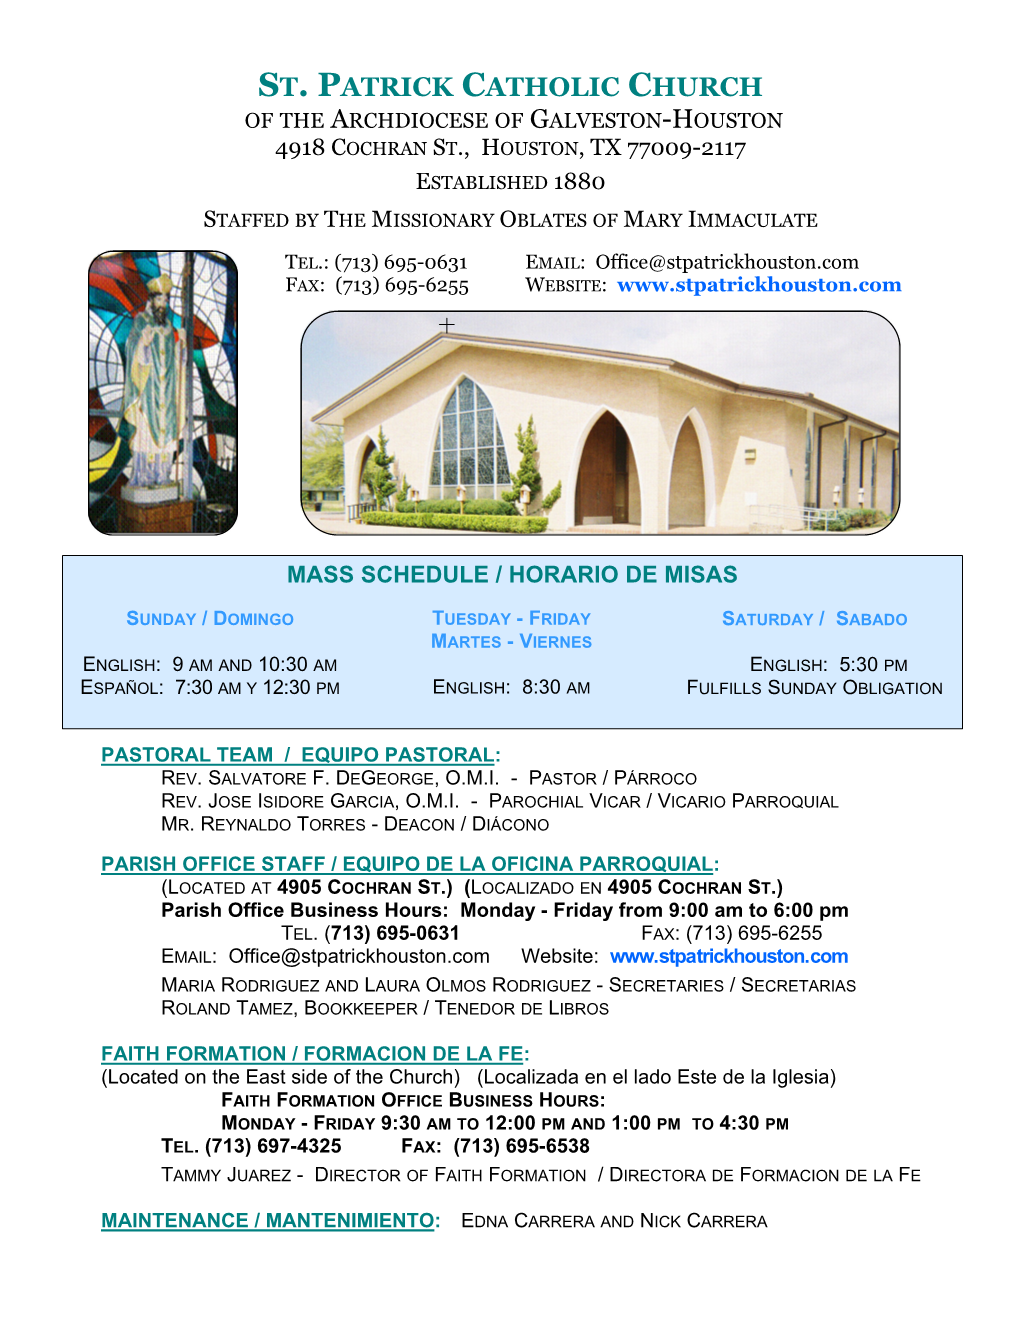 St. Patrick Catholic Church | Houston, TX